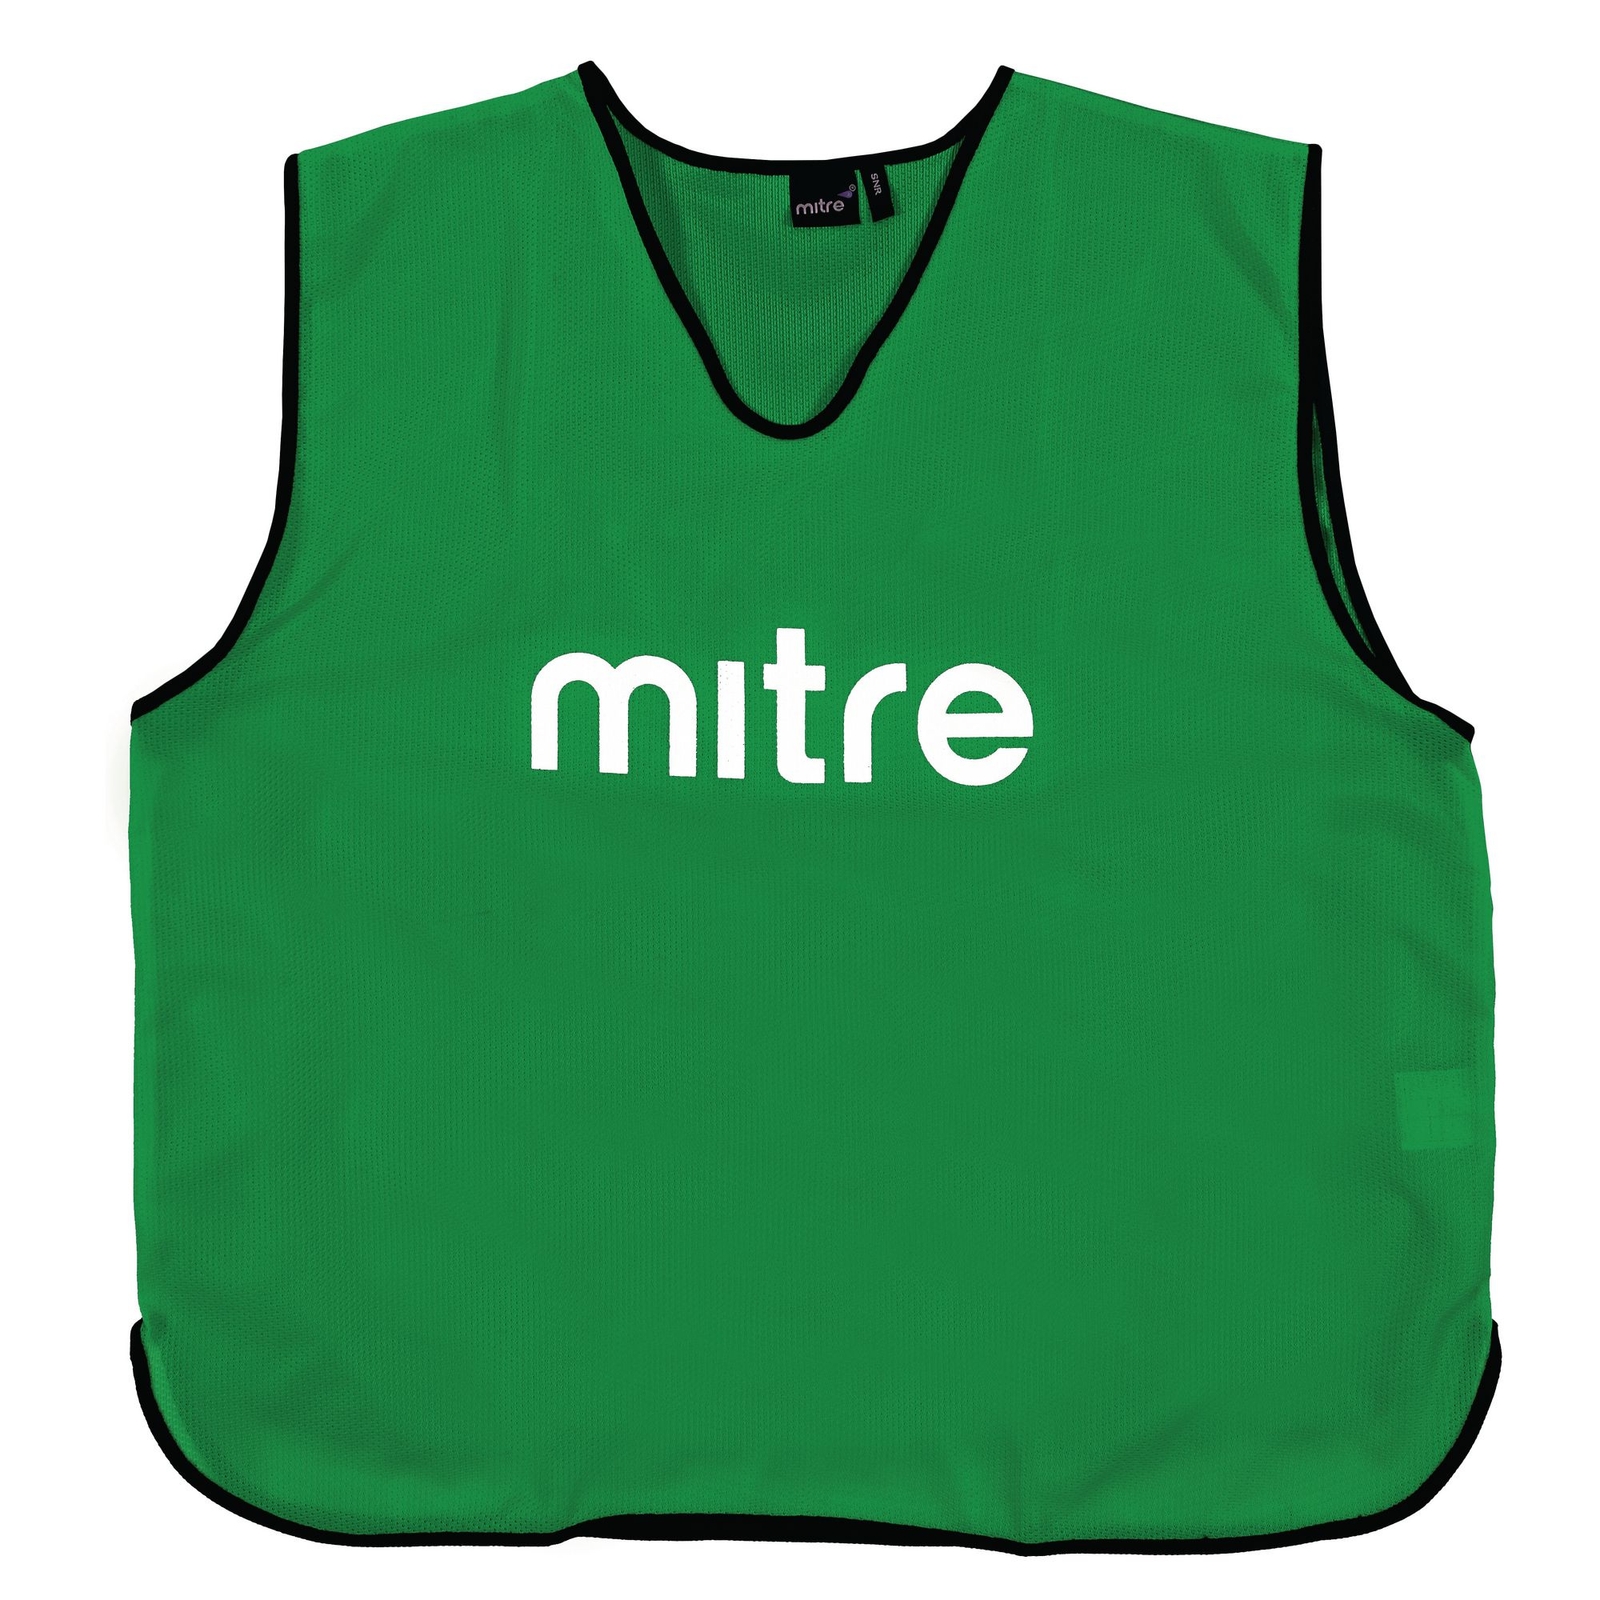 Mitre Training Bib - 6-12 Years - Green/Black